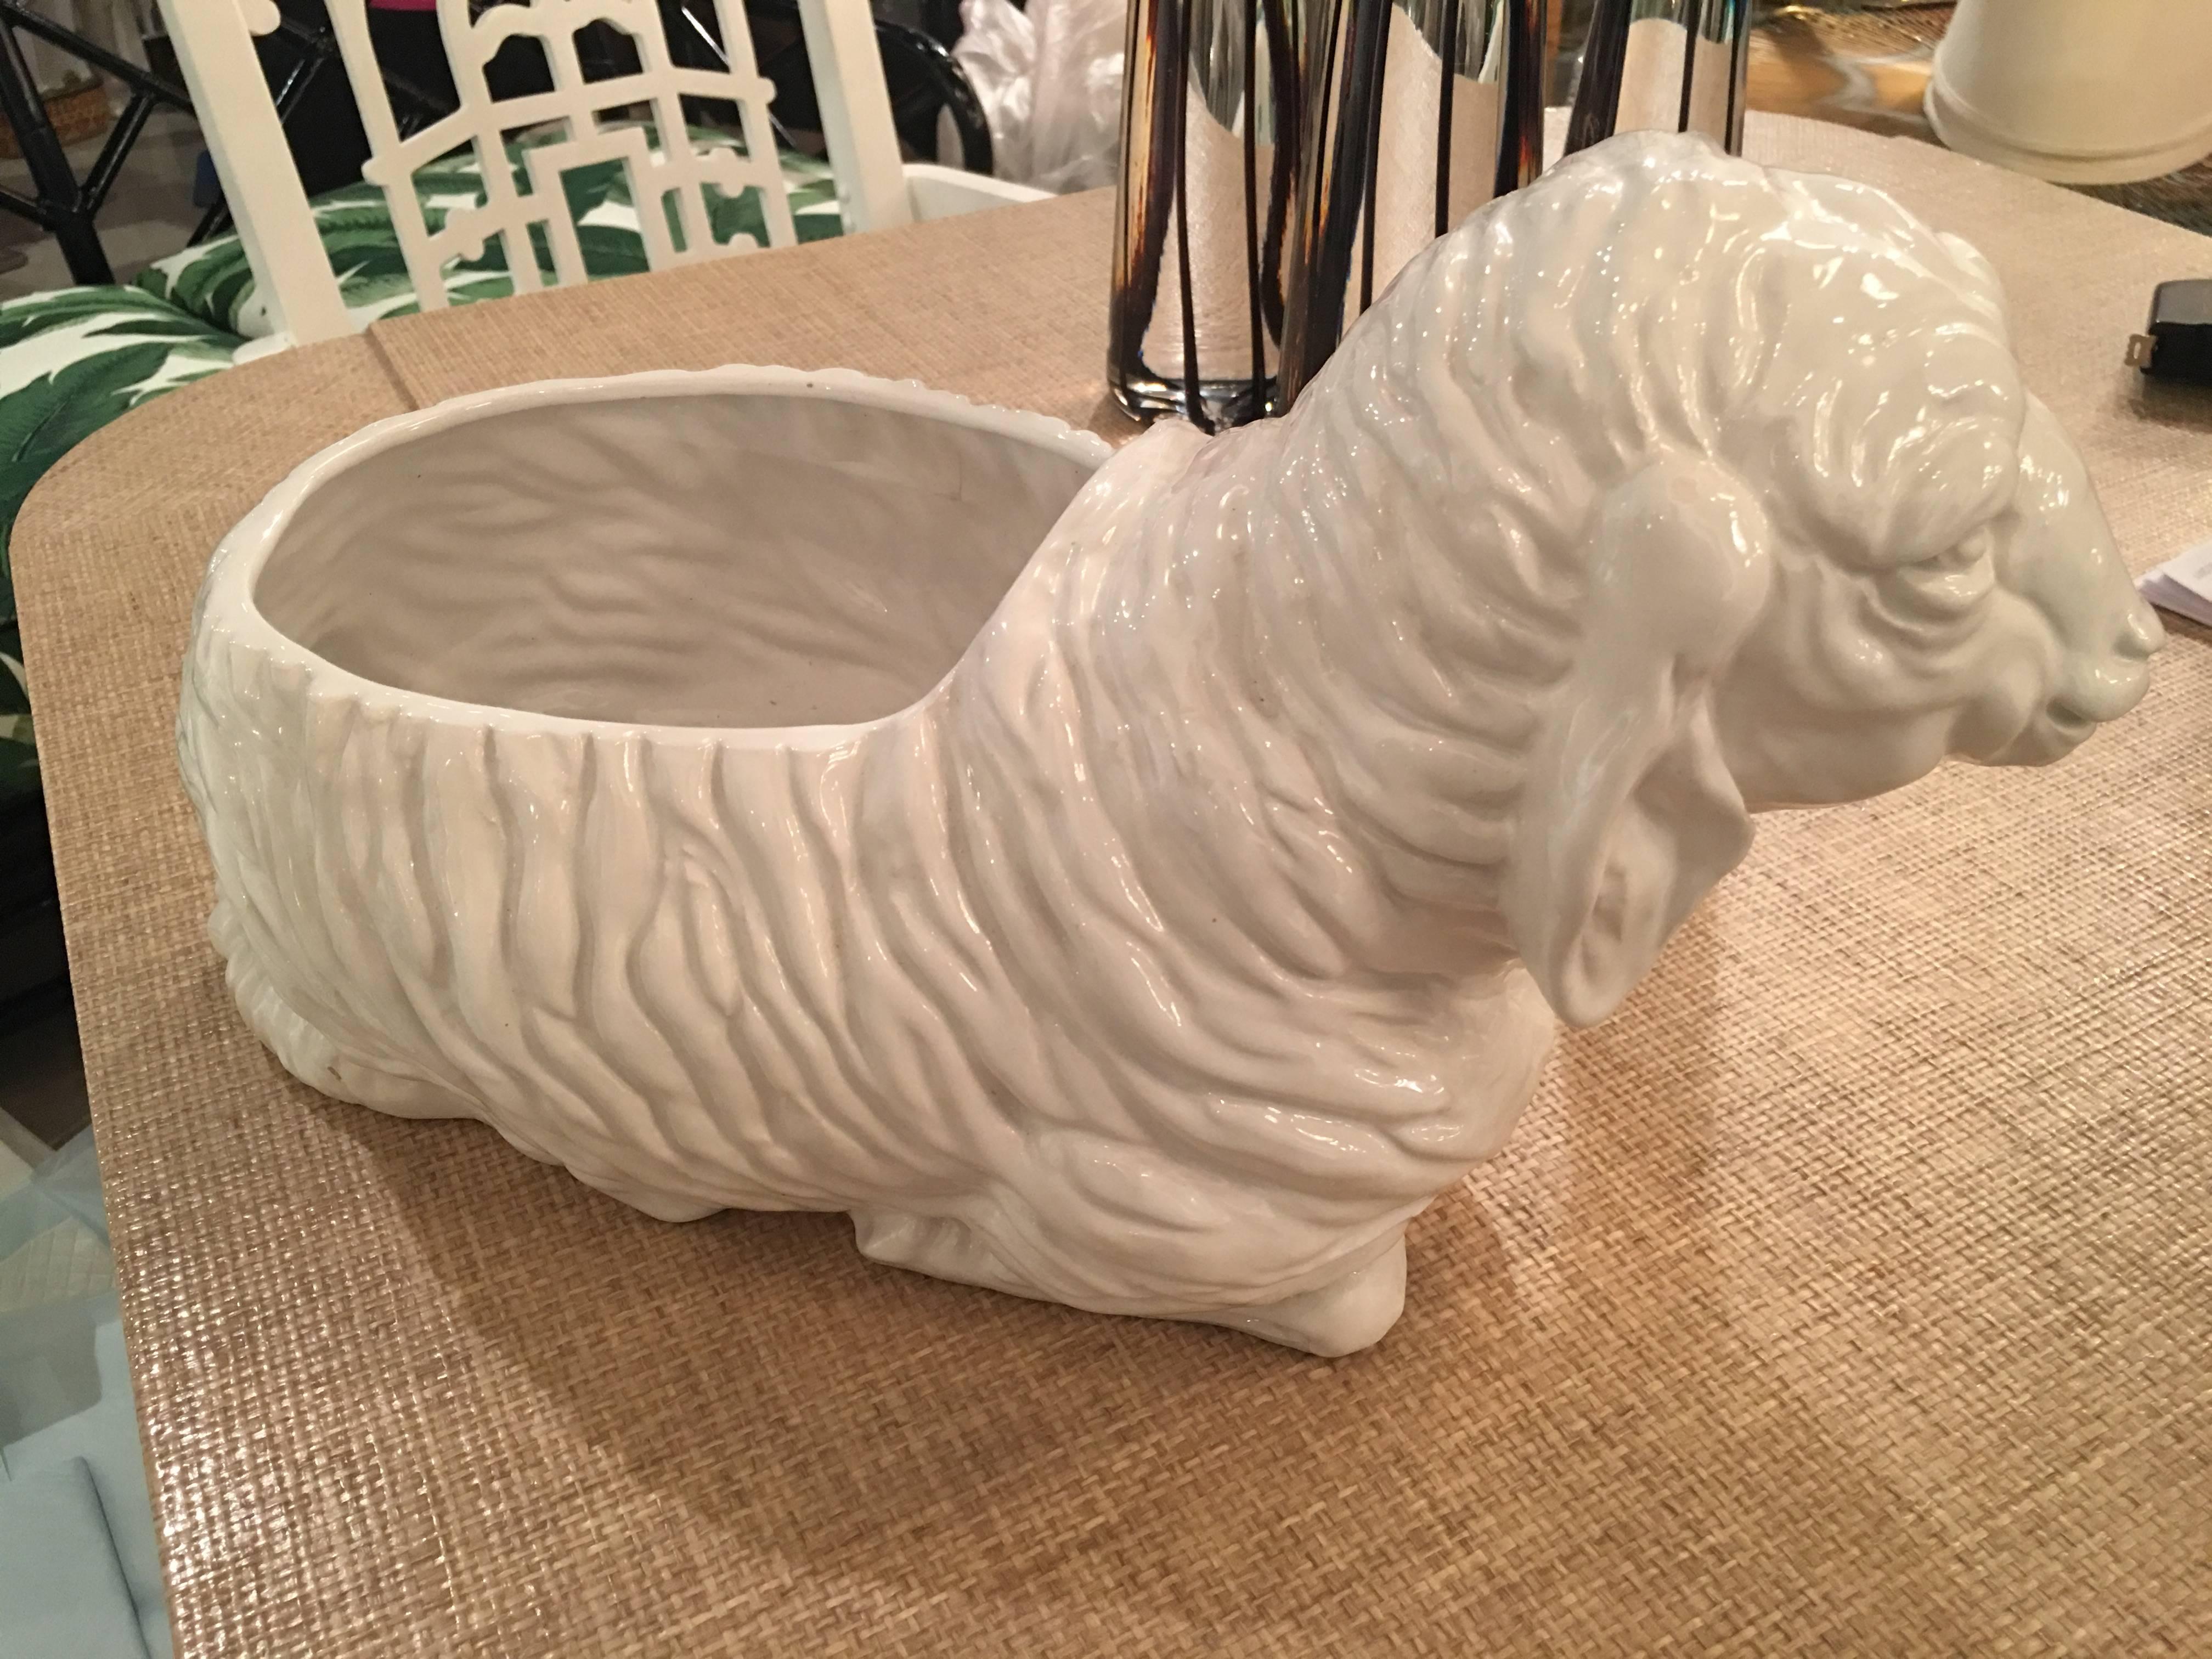 Italian Sheep Lamp White Ceramic Statue Planter Pot Vintage Hollywood Regency  For Sale 1